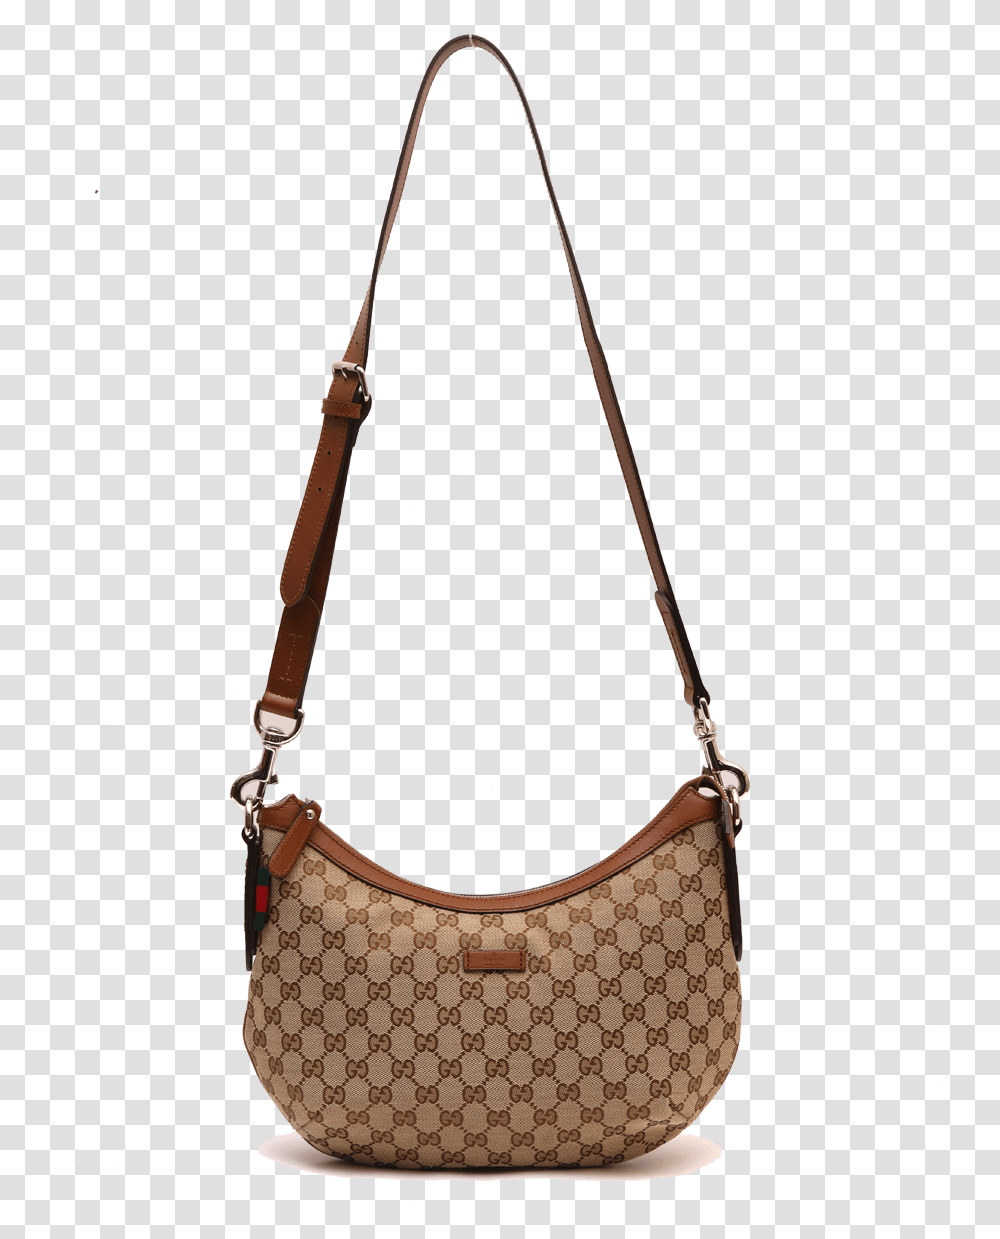 Gucci Messenger Bag Deer Antlers Background, Handbag, Accessories, Accessory, Purse Transparent Png